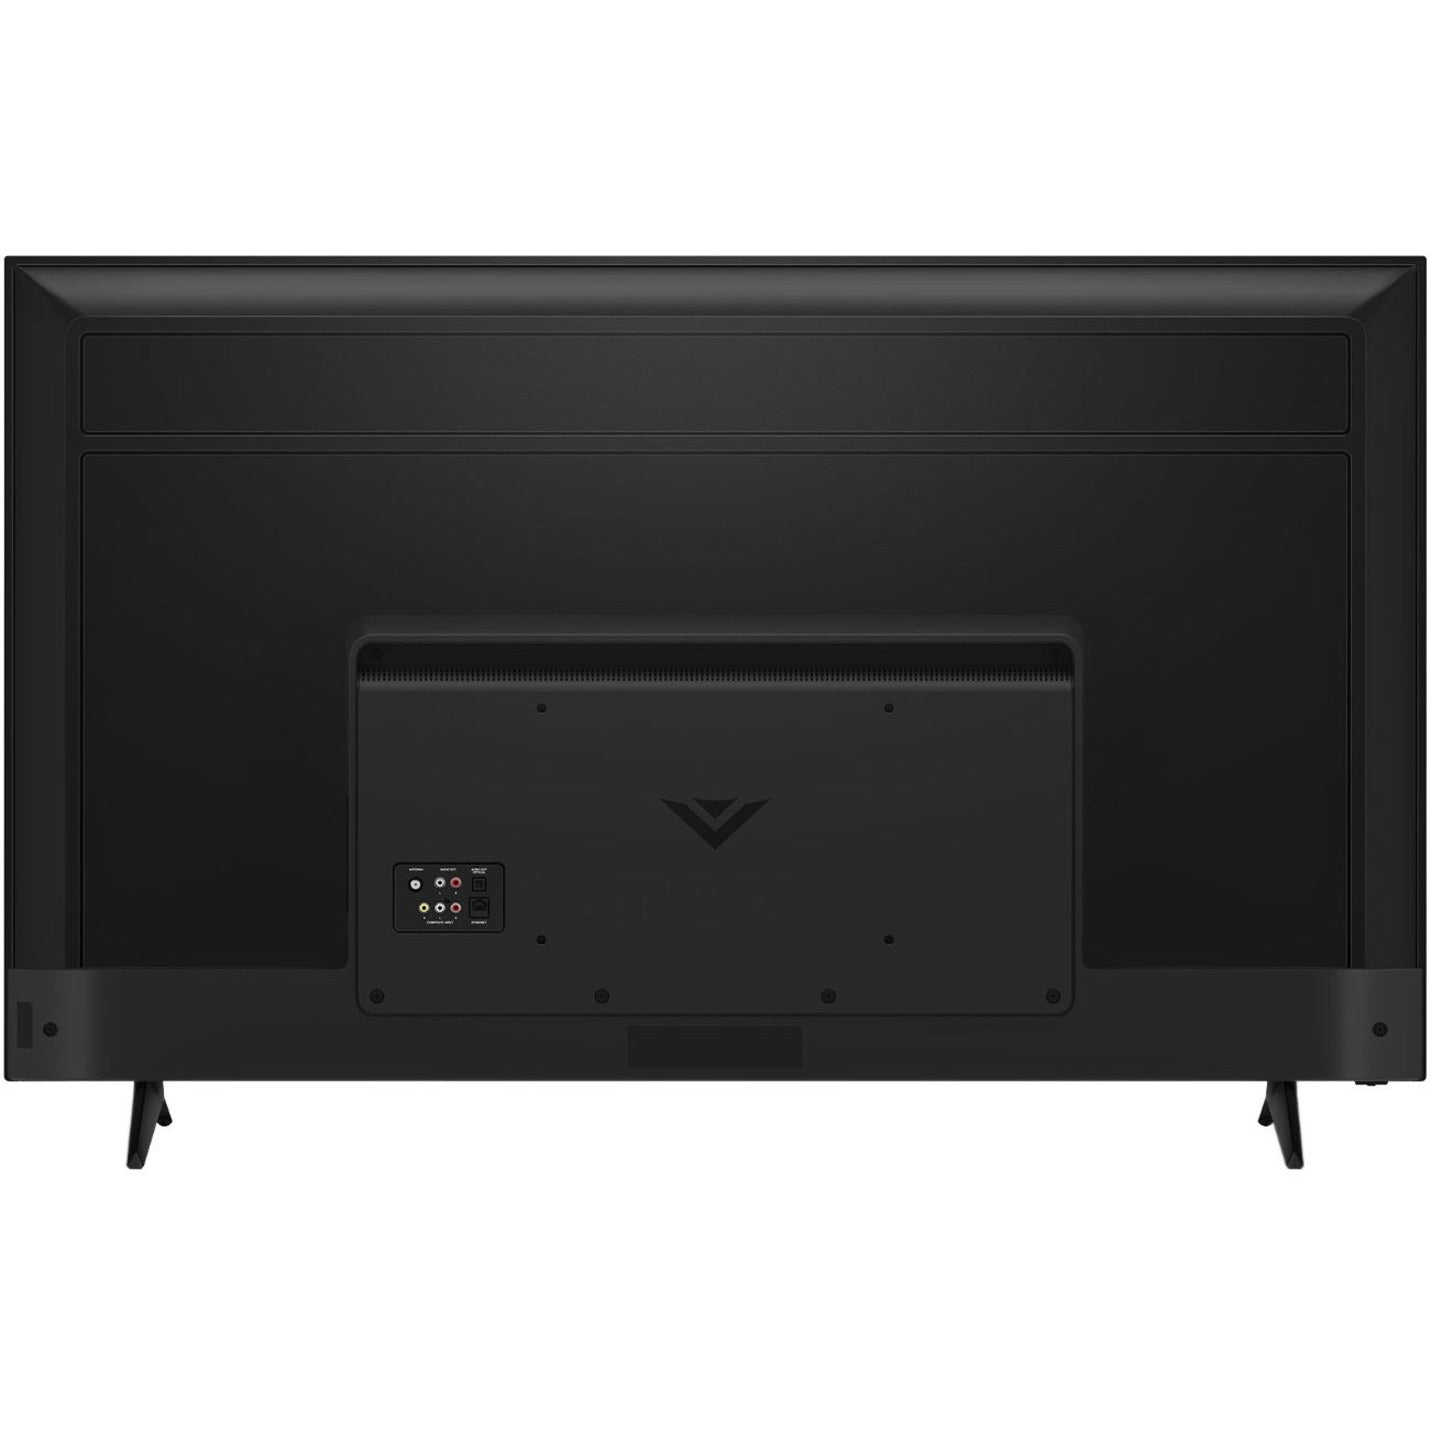 VIZIO M55Q6-J01 M-Series Quantum 55" 4K HDR Smart TV, Quantum Color, SmartCast